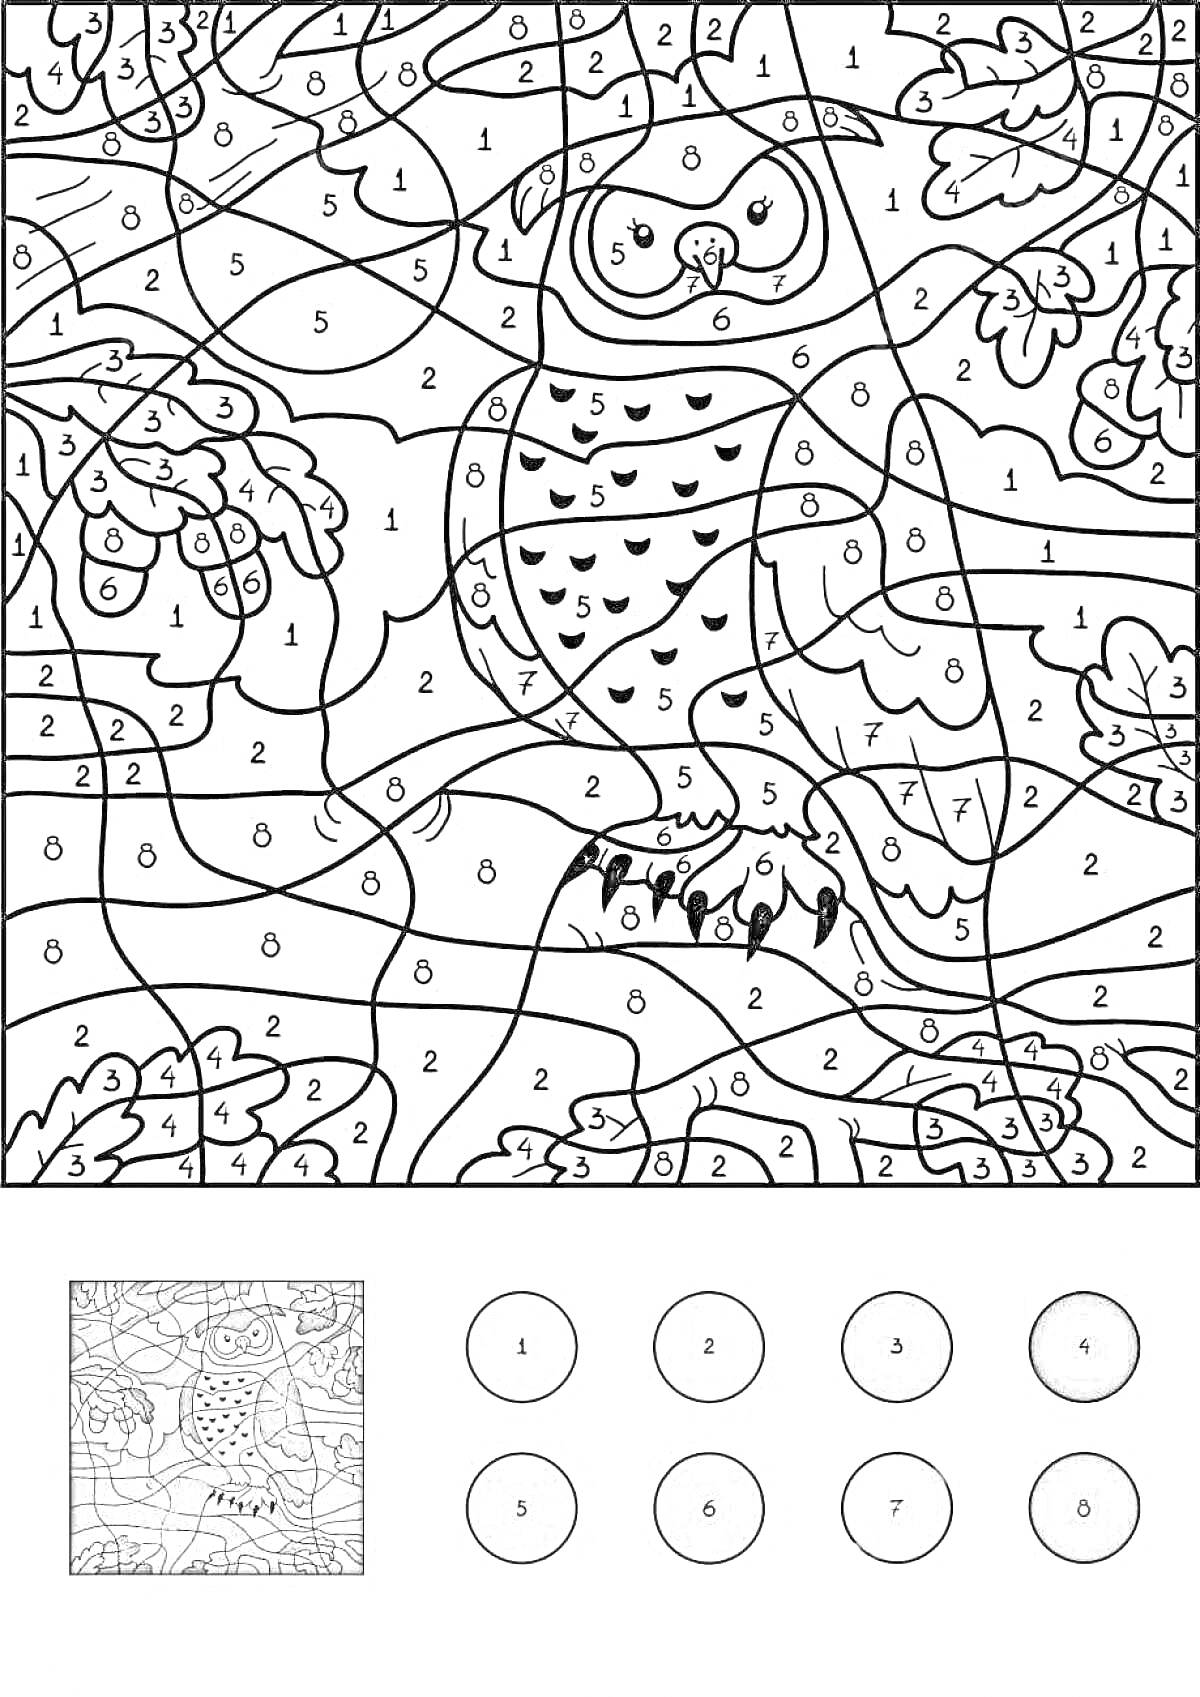 Раскраска Совенок на ветке с листьями - раскраска по цифрам